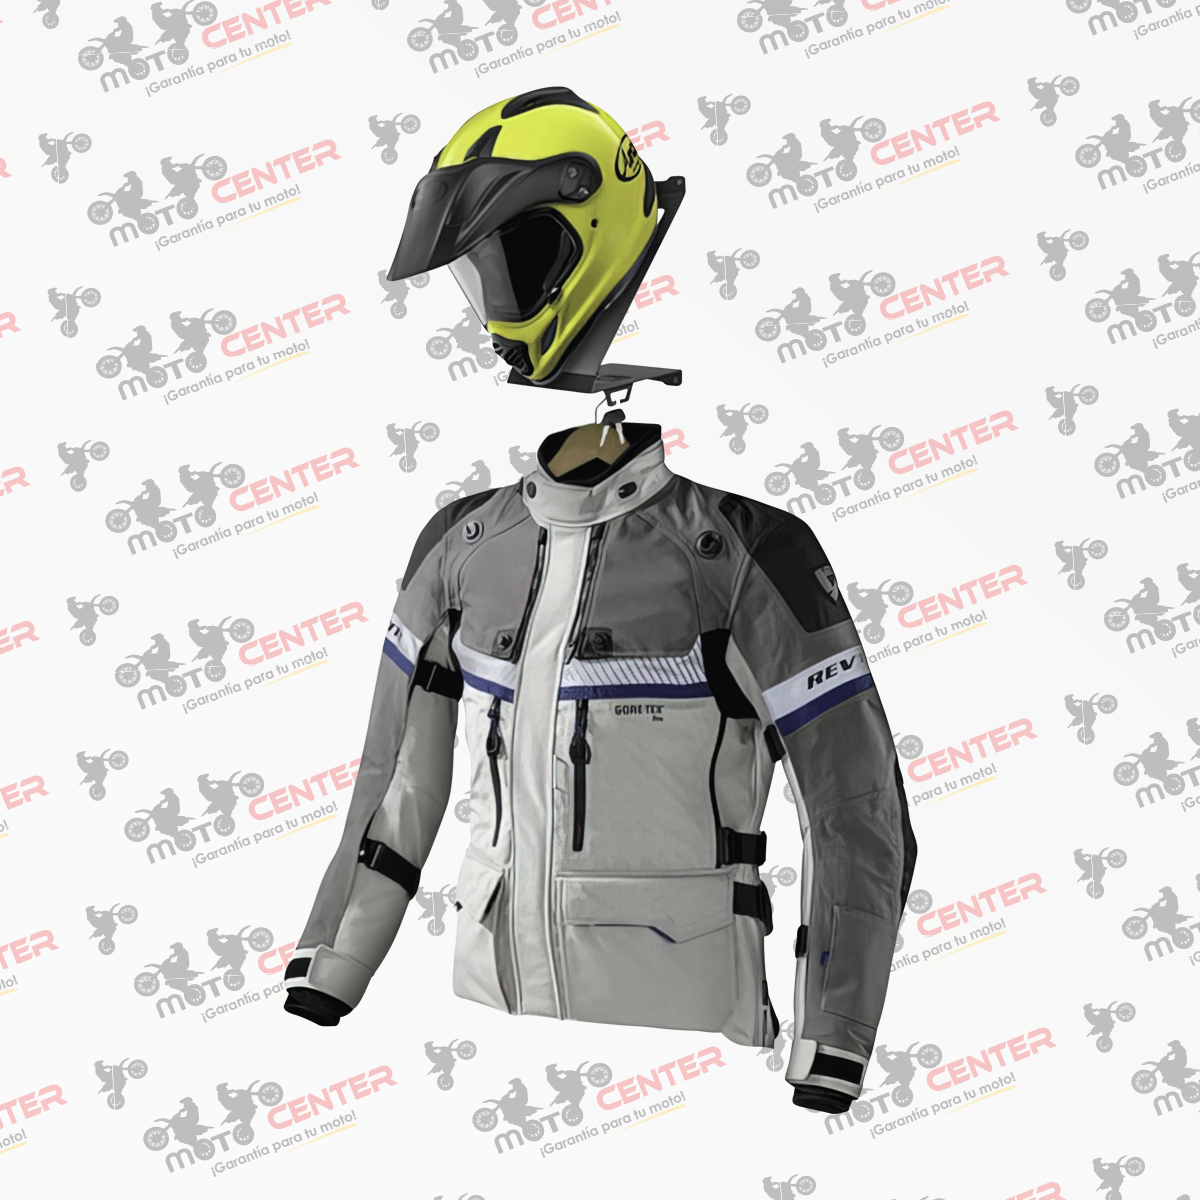 Soporte para casco montado en la pared (águila), bonito metal hueco con  láser, ventilado para casco, colgador de casco de motocicleta y soporte  para